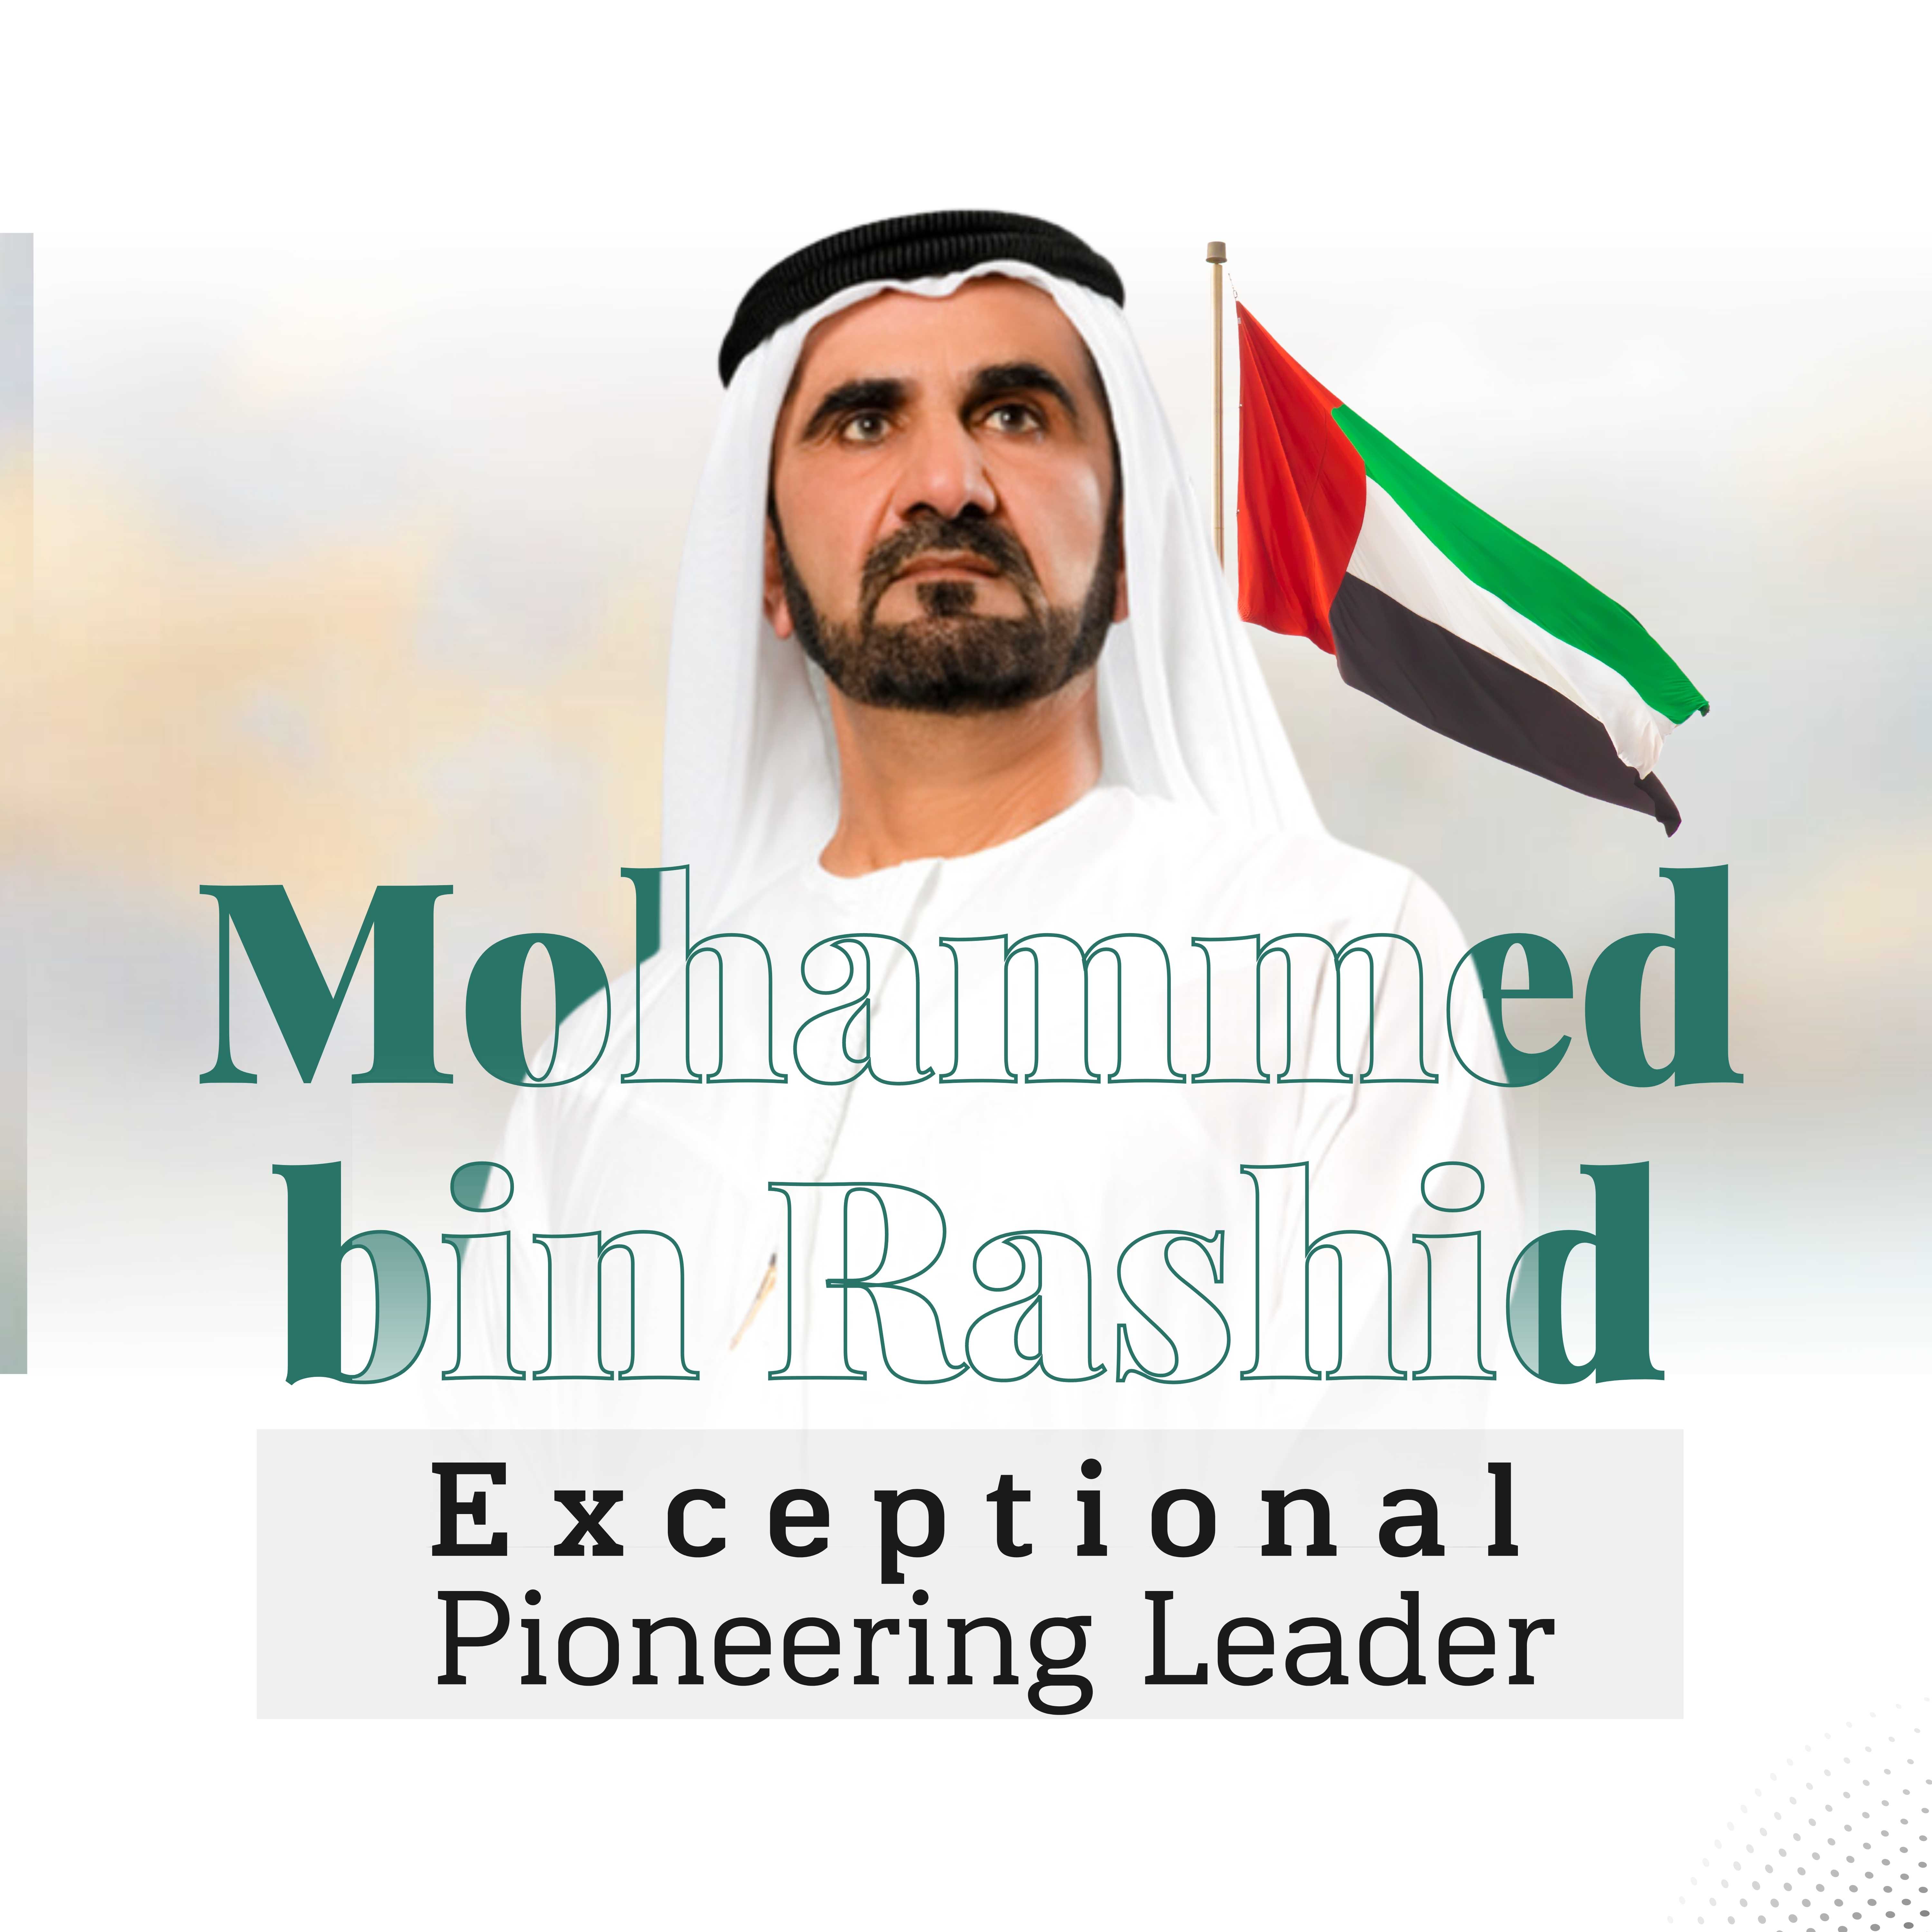 Mohammed bin Rashid ... Exceptional Pioneering Leader